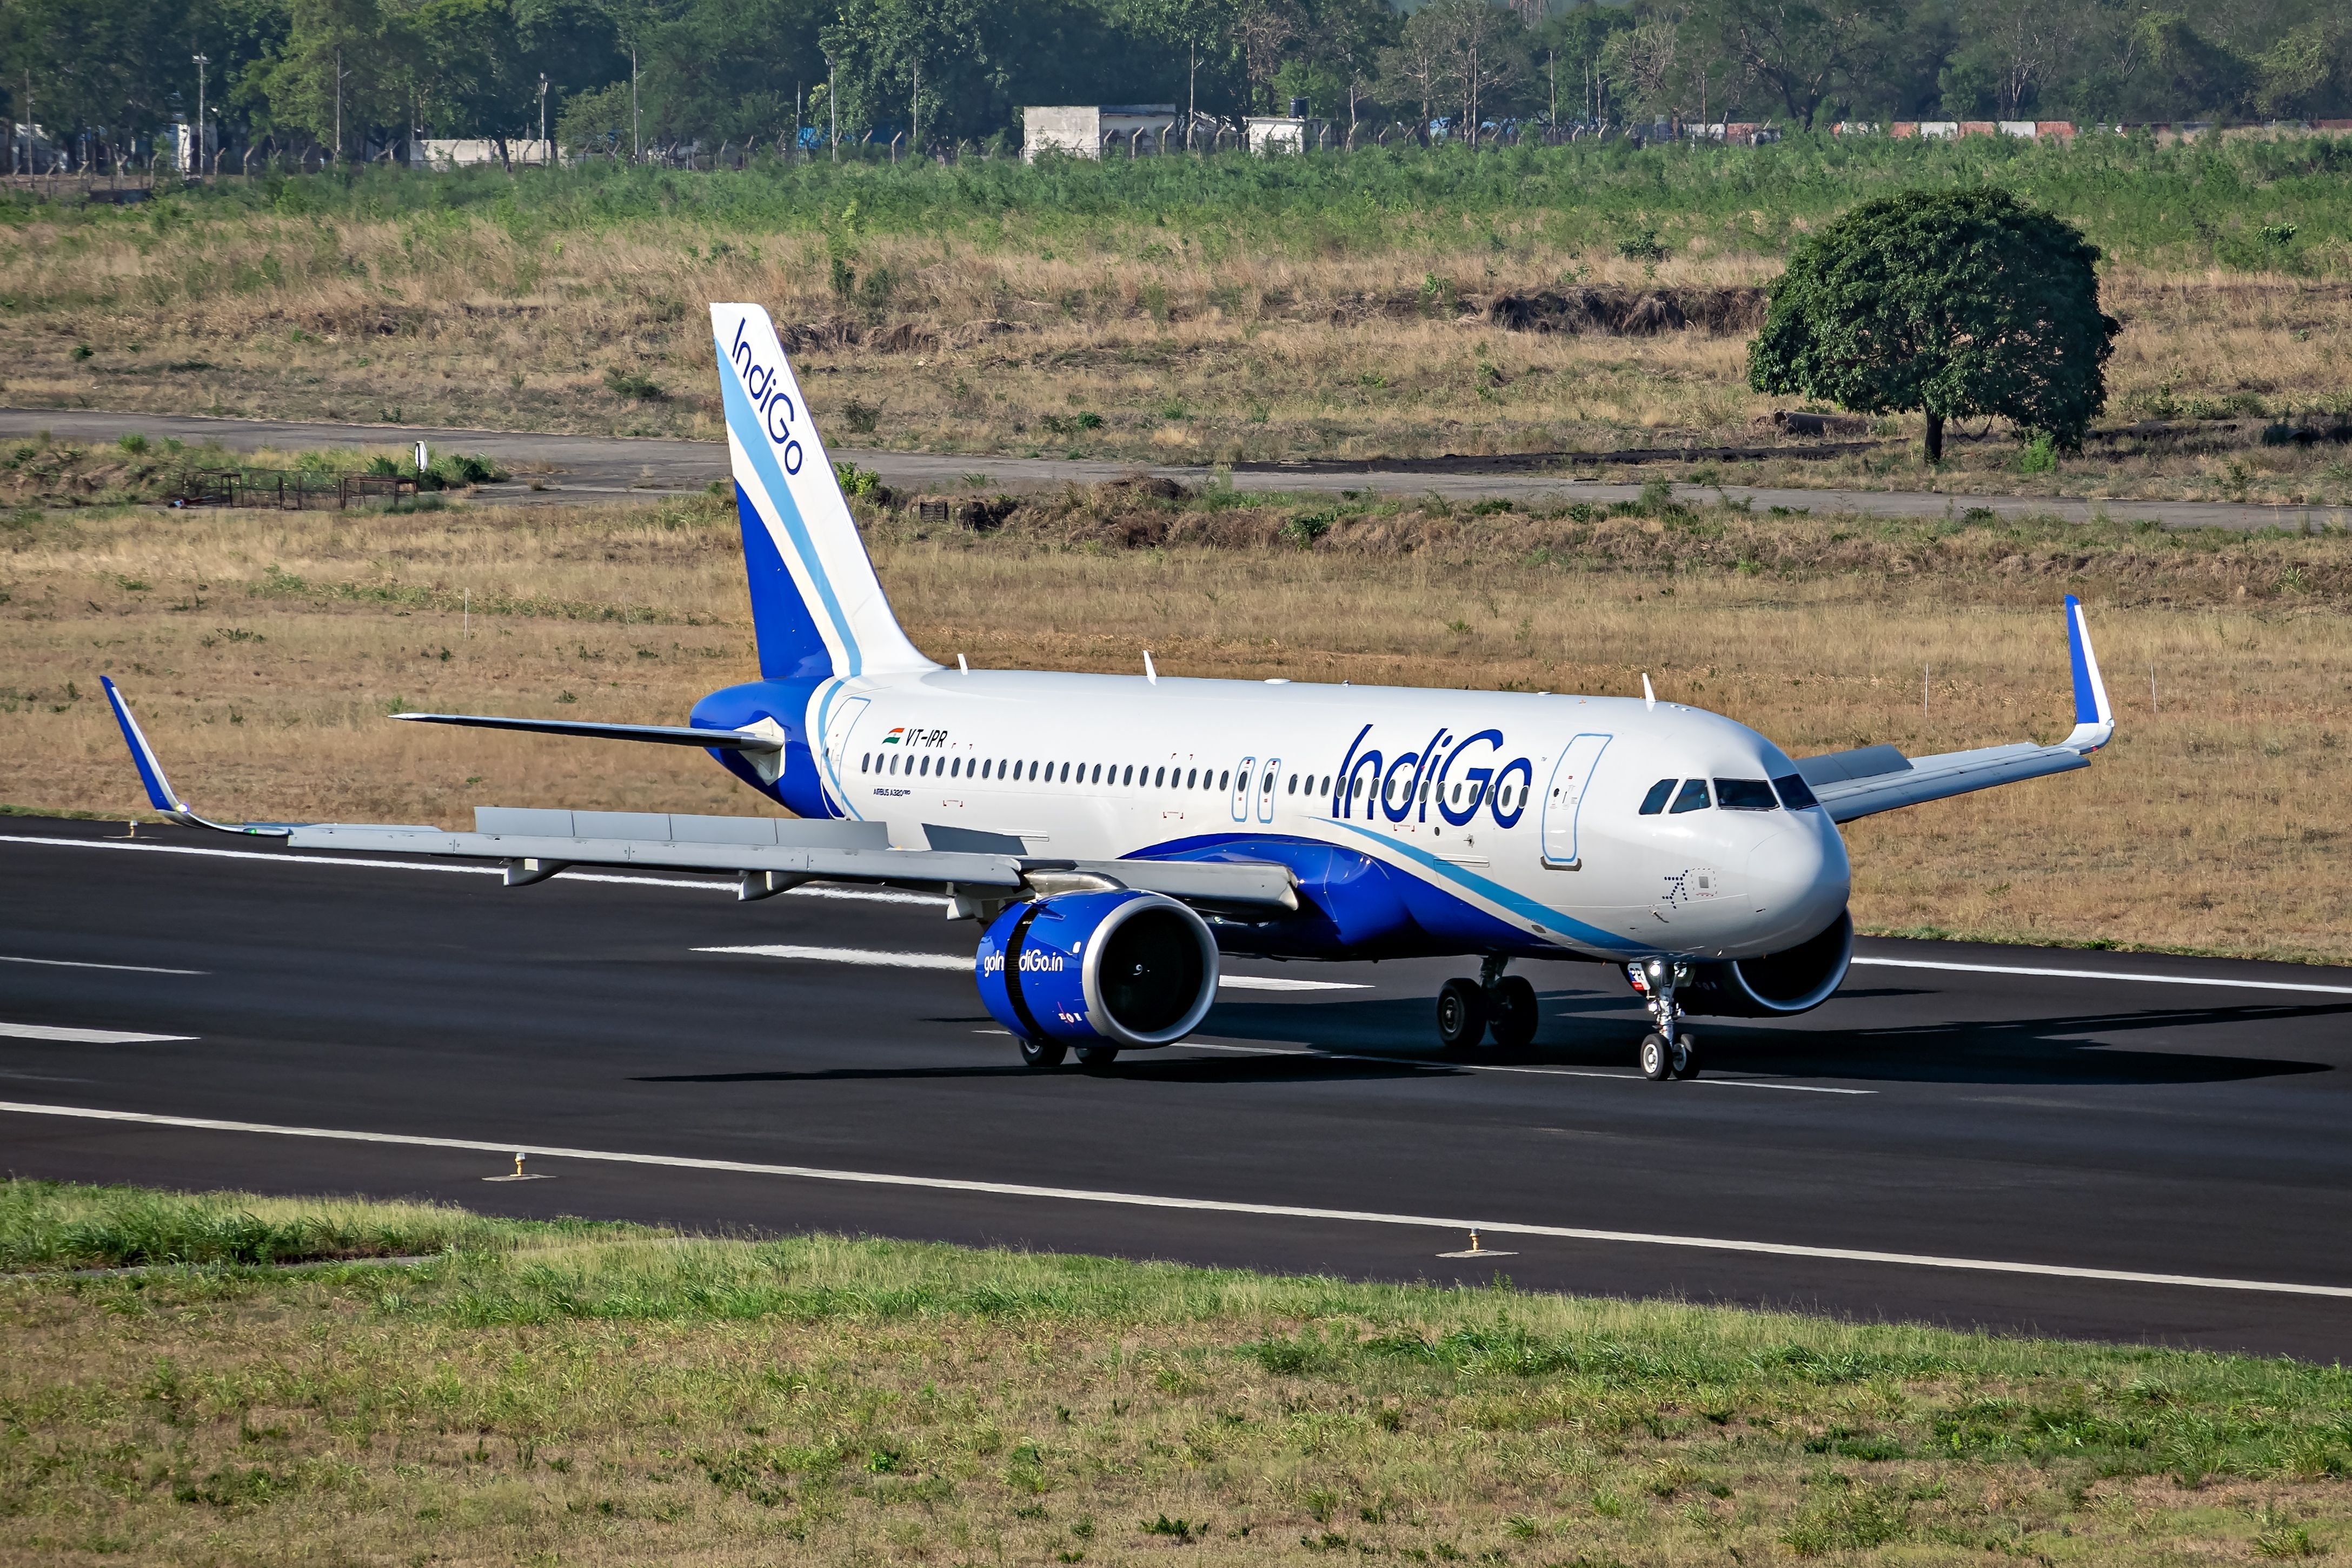 IndiGo Airbus A320